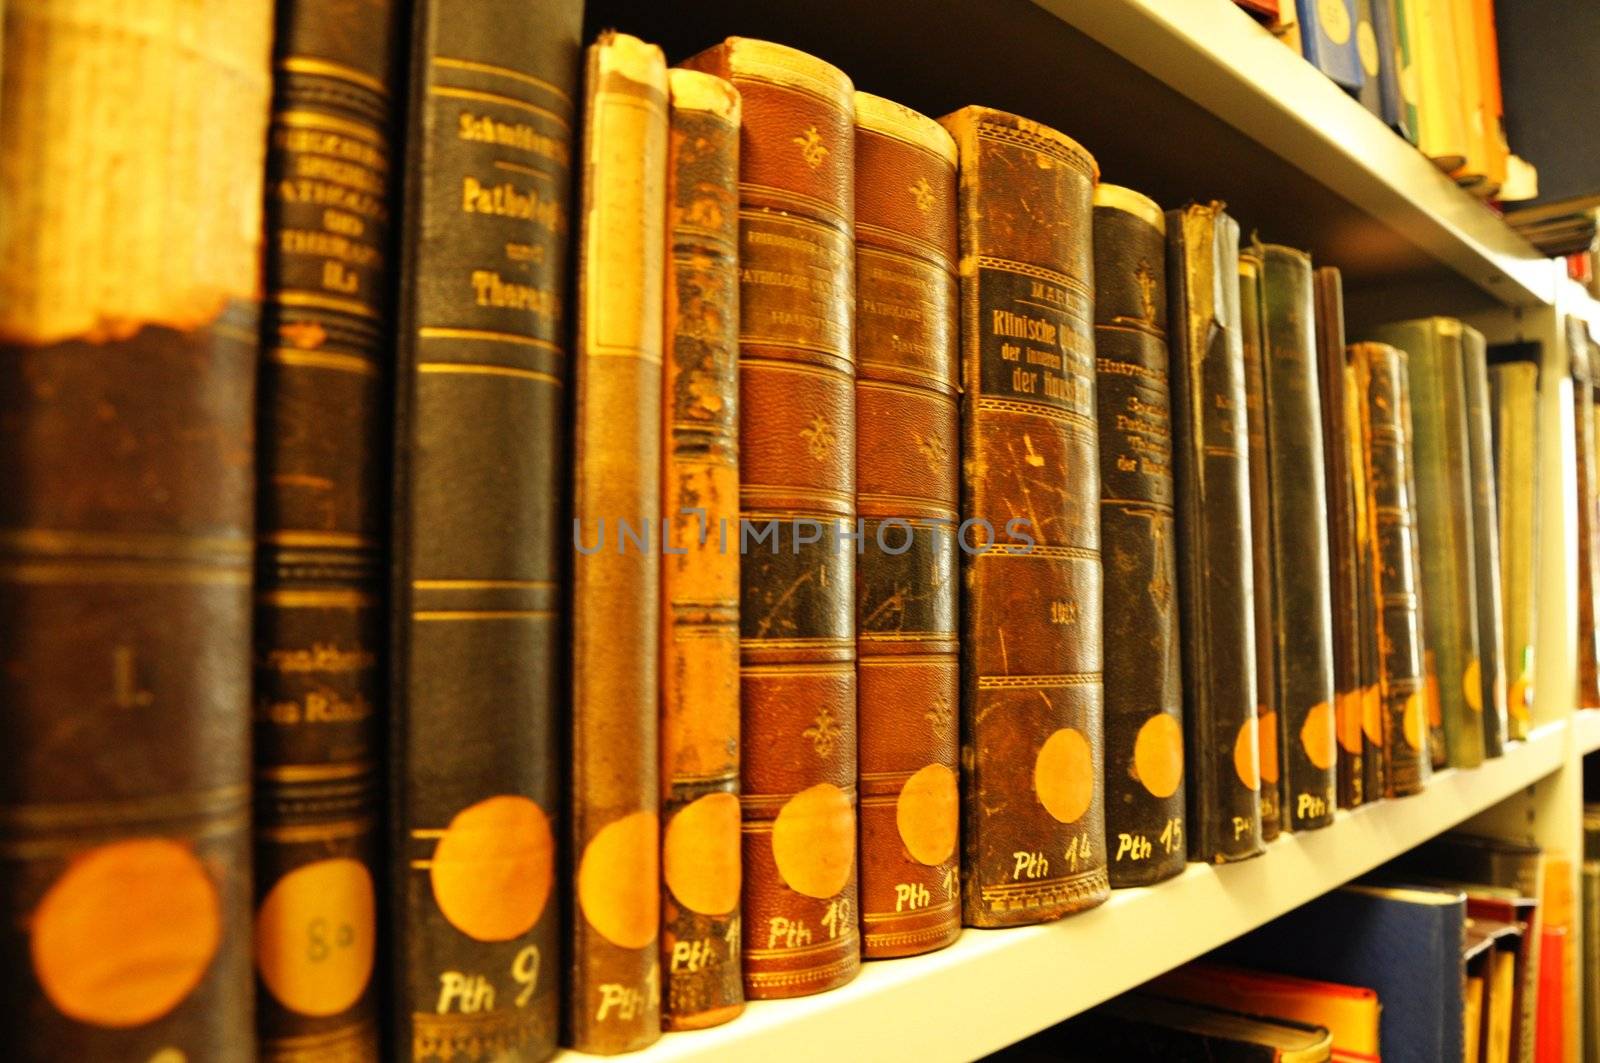 books in a library bookshelf for university education